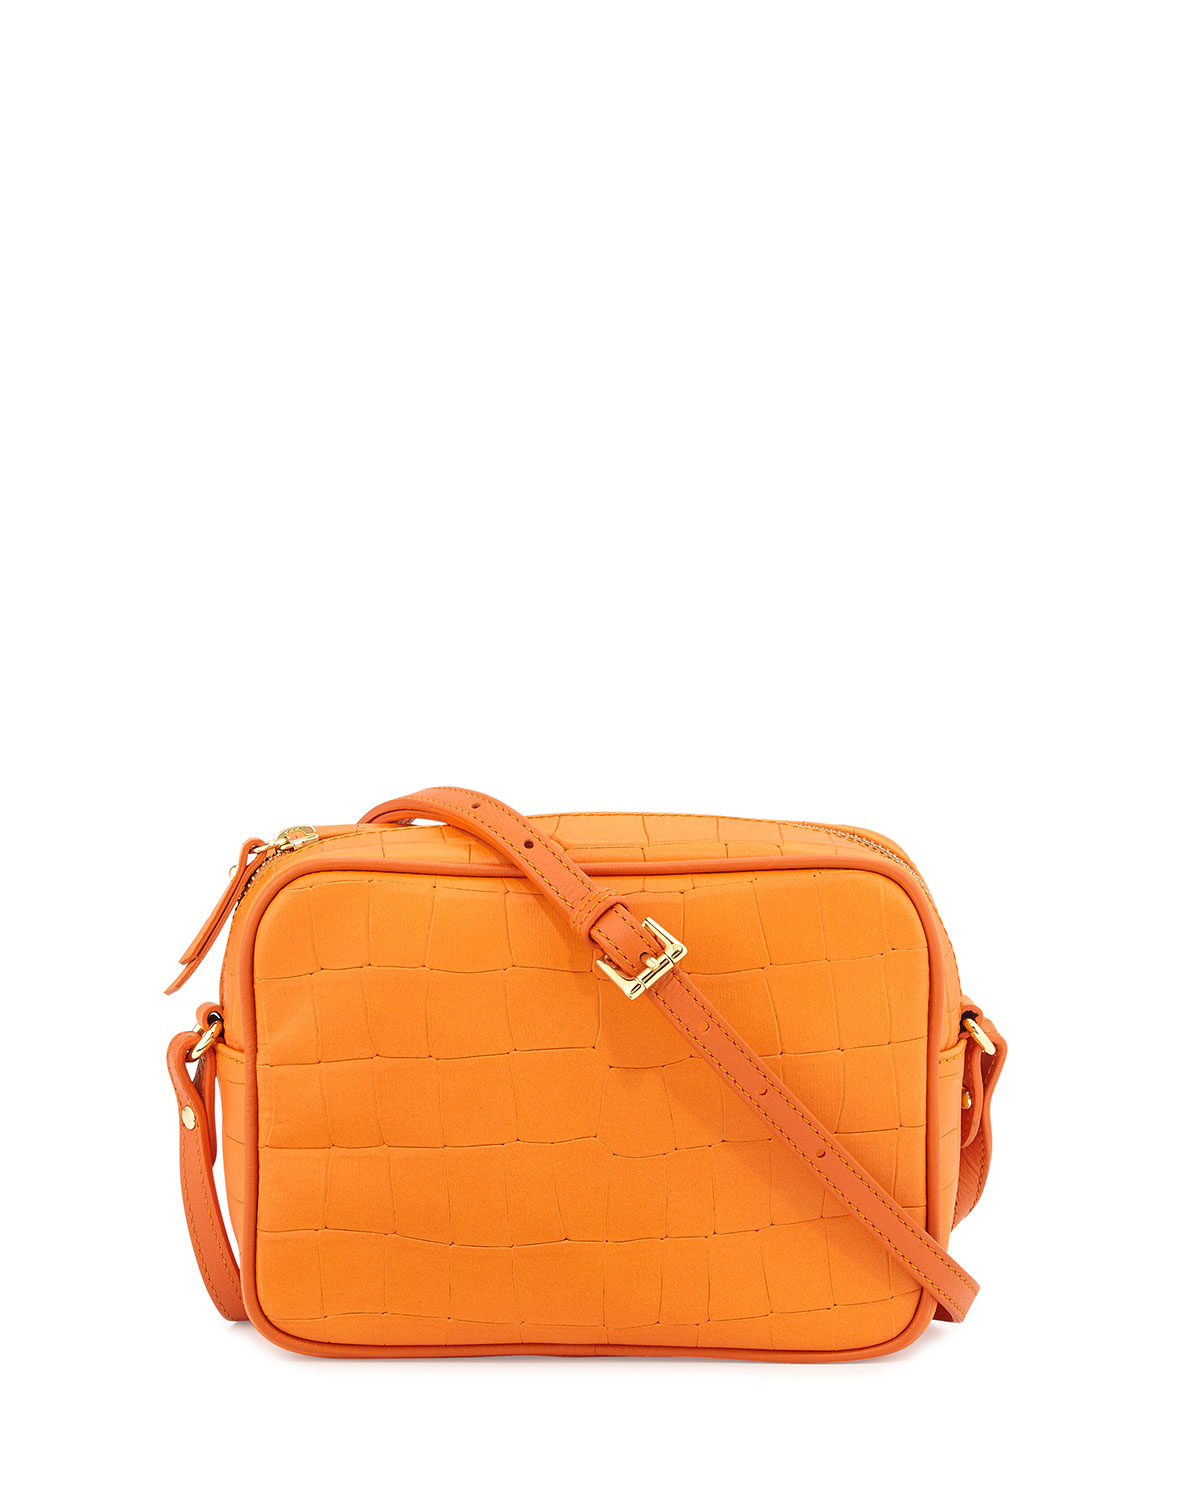 Lyst - Neiman Marcus Madison Croc-embossed Leather Crossbody Bag in Orange